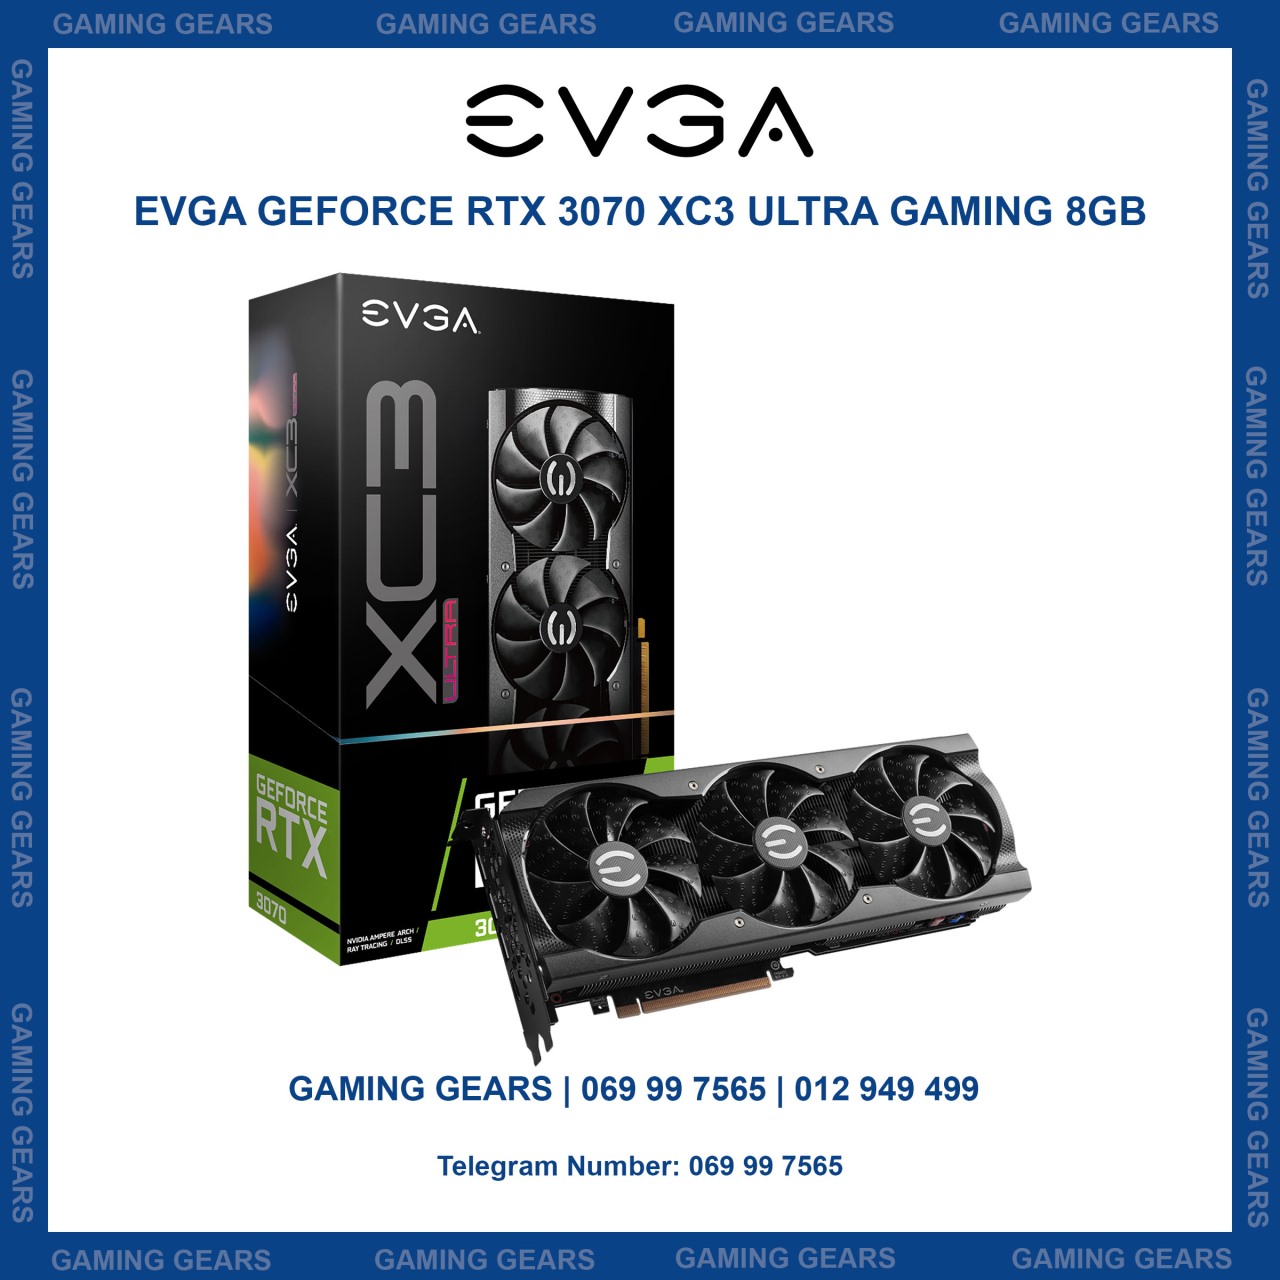 EVGA GeForce RTX 3070 XC3 ULTRA GAMING 8GB